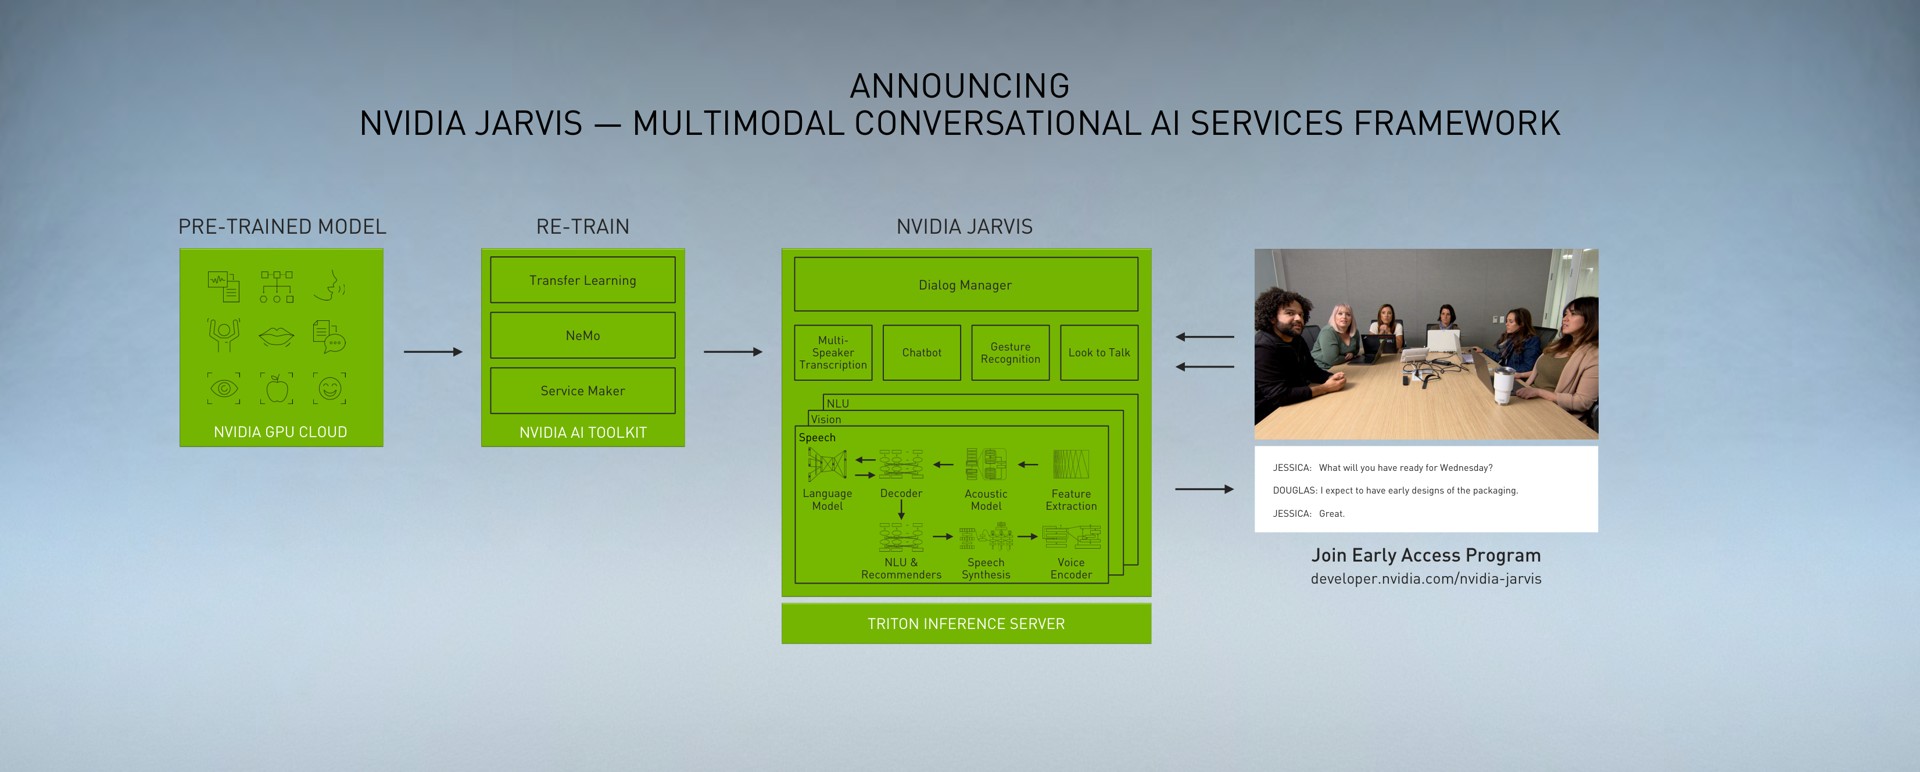 announcing multimodal conversational services framework | NVIDIA